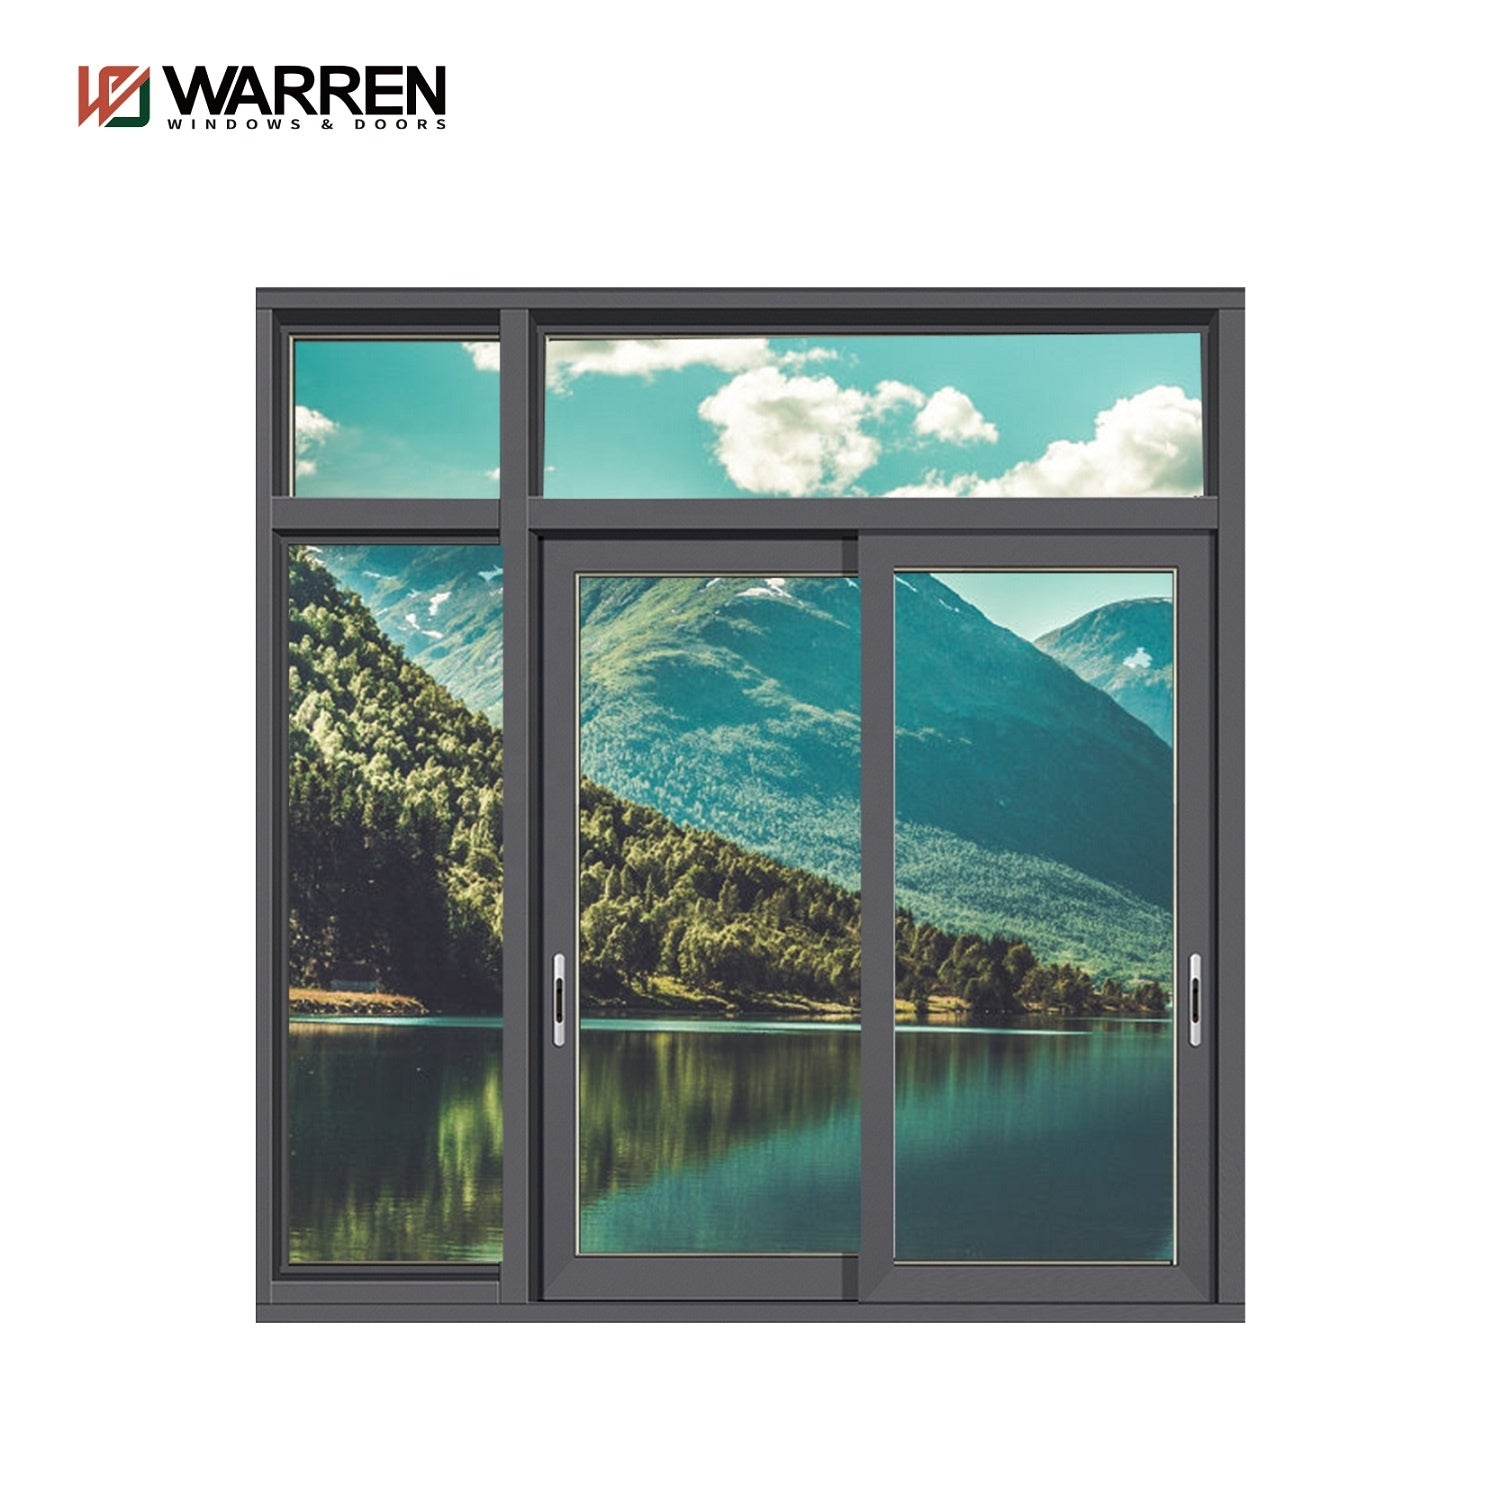 Warren factory outlet pastoral style office interior double glazed sliding windows aluminum screen thermal break sliding window